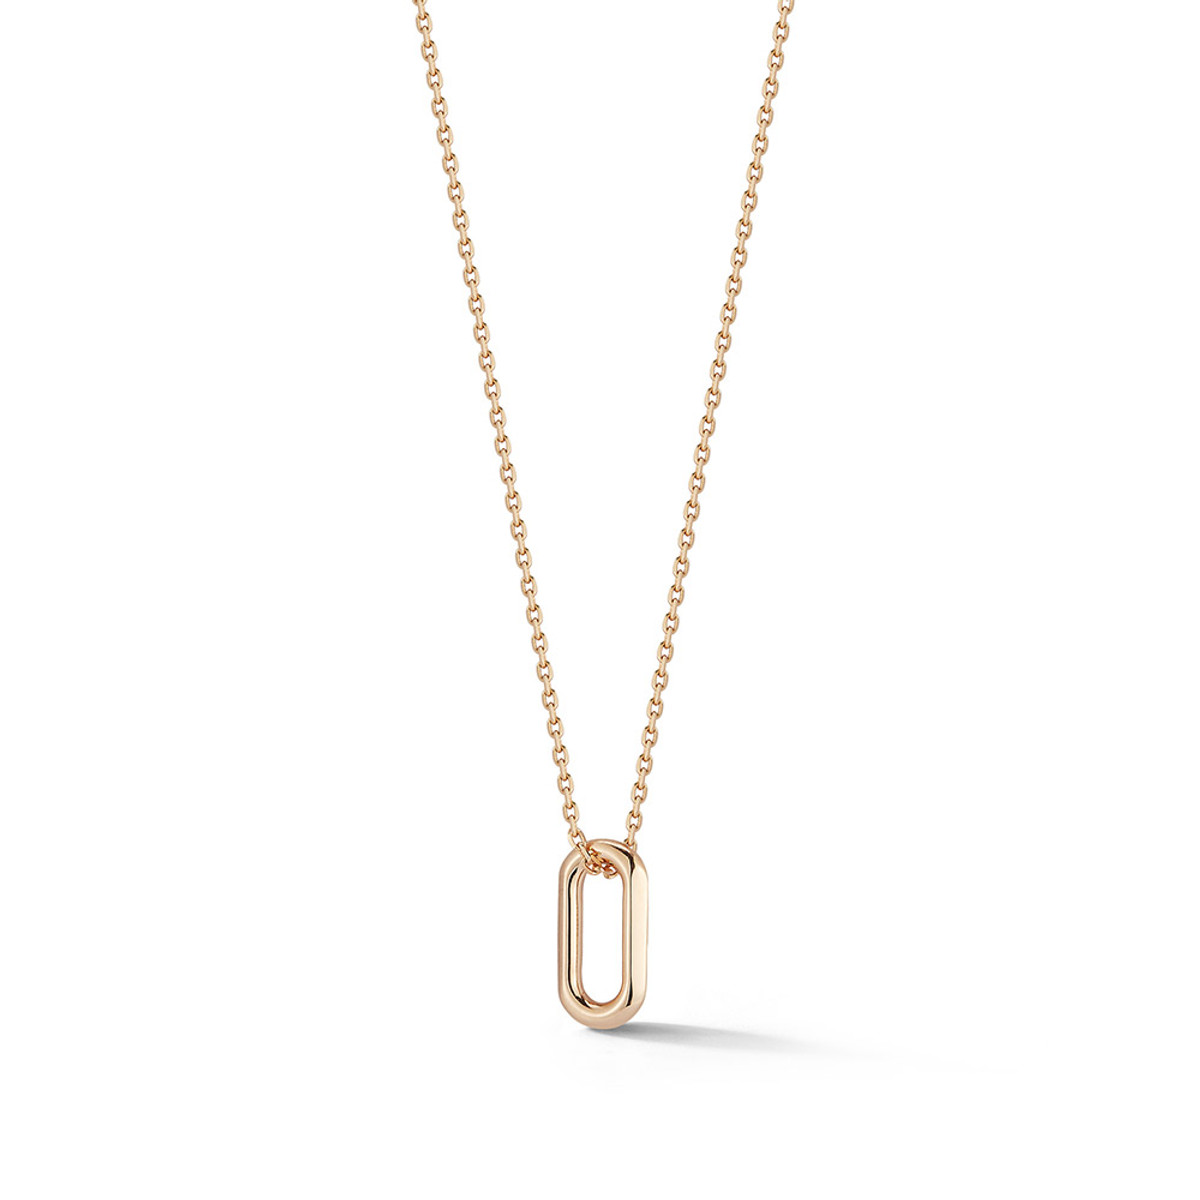 Walters Faith Saxon 18K Rose Gold Mini Single Link Necklace-62279 Product Image